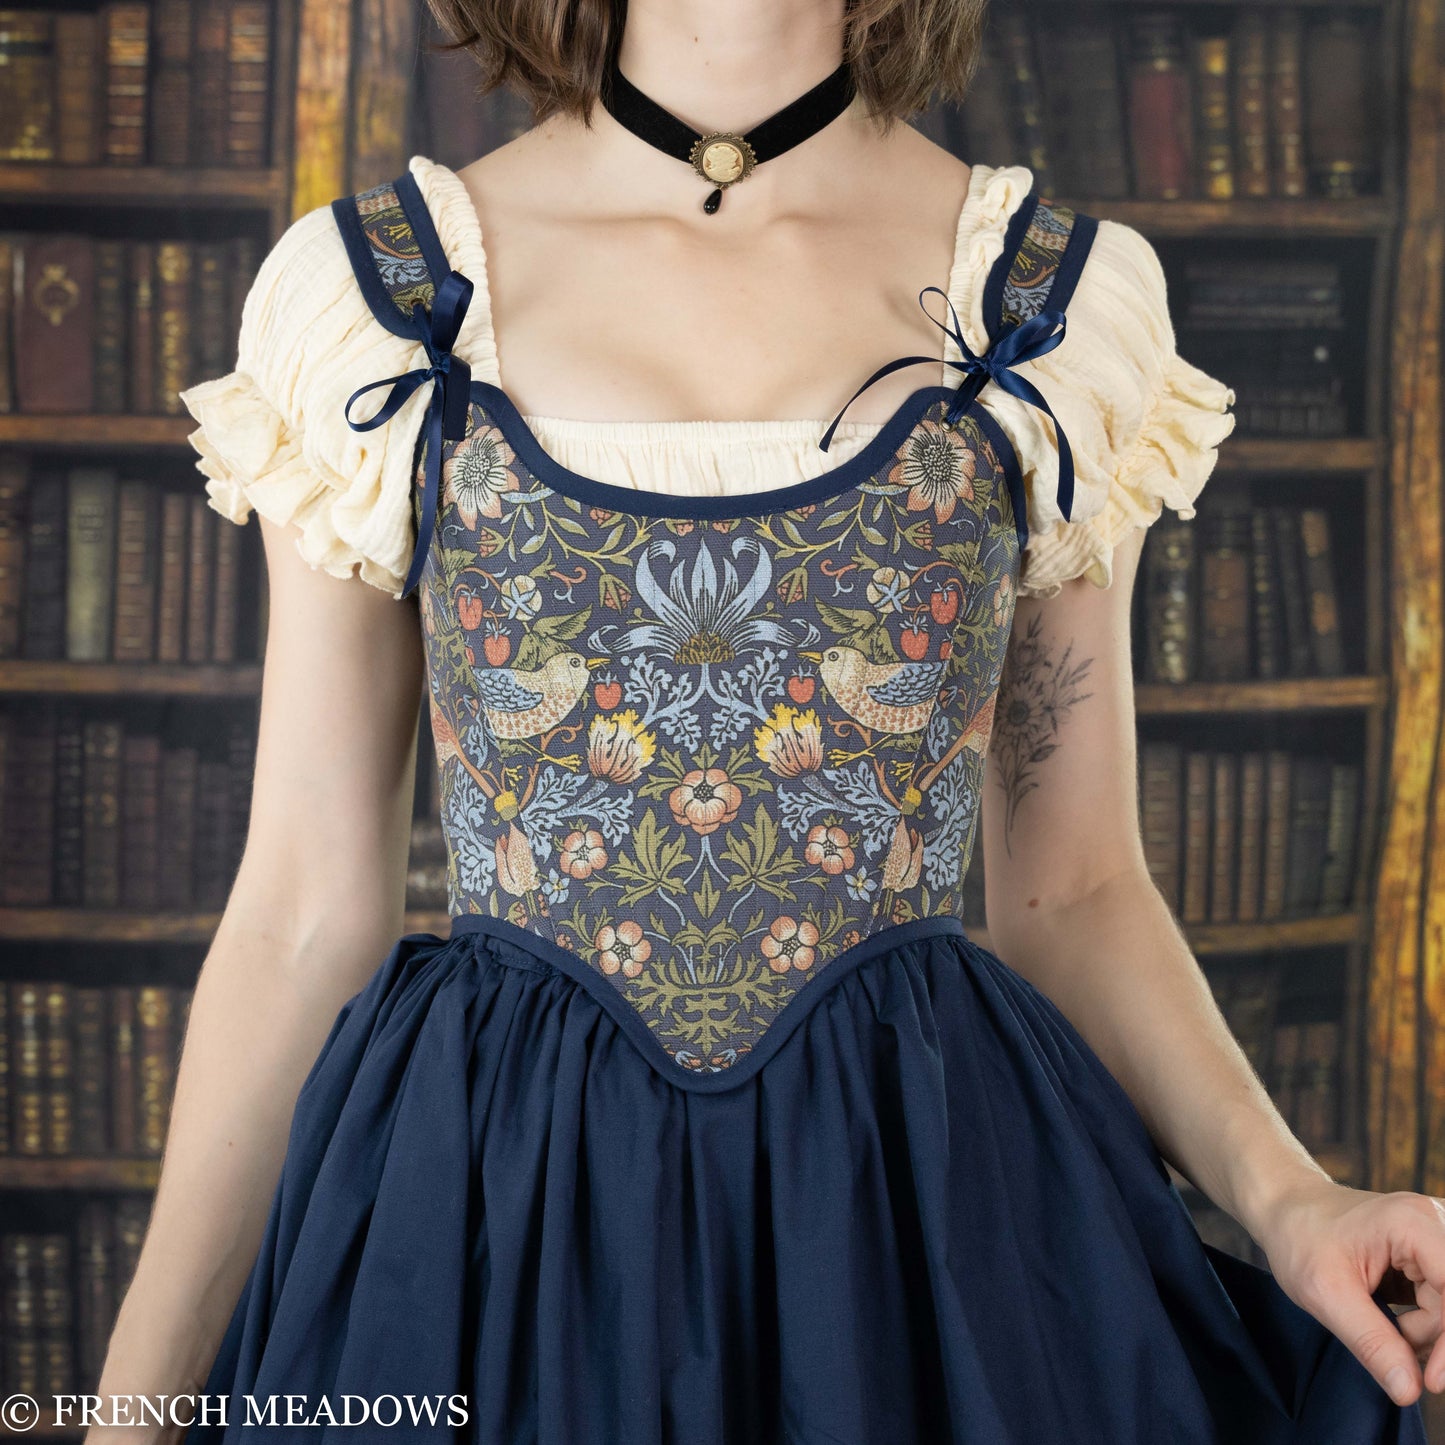 william morris strawberry thief corset tapestry corset elizabethan stays renaissance faire costume